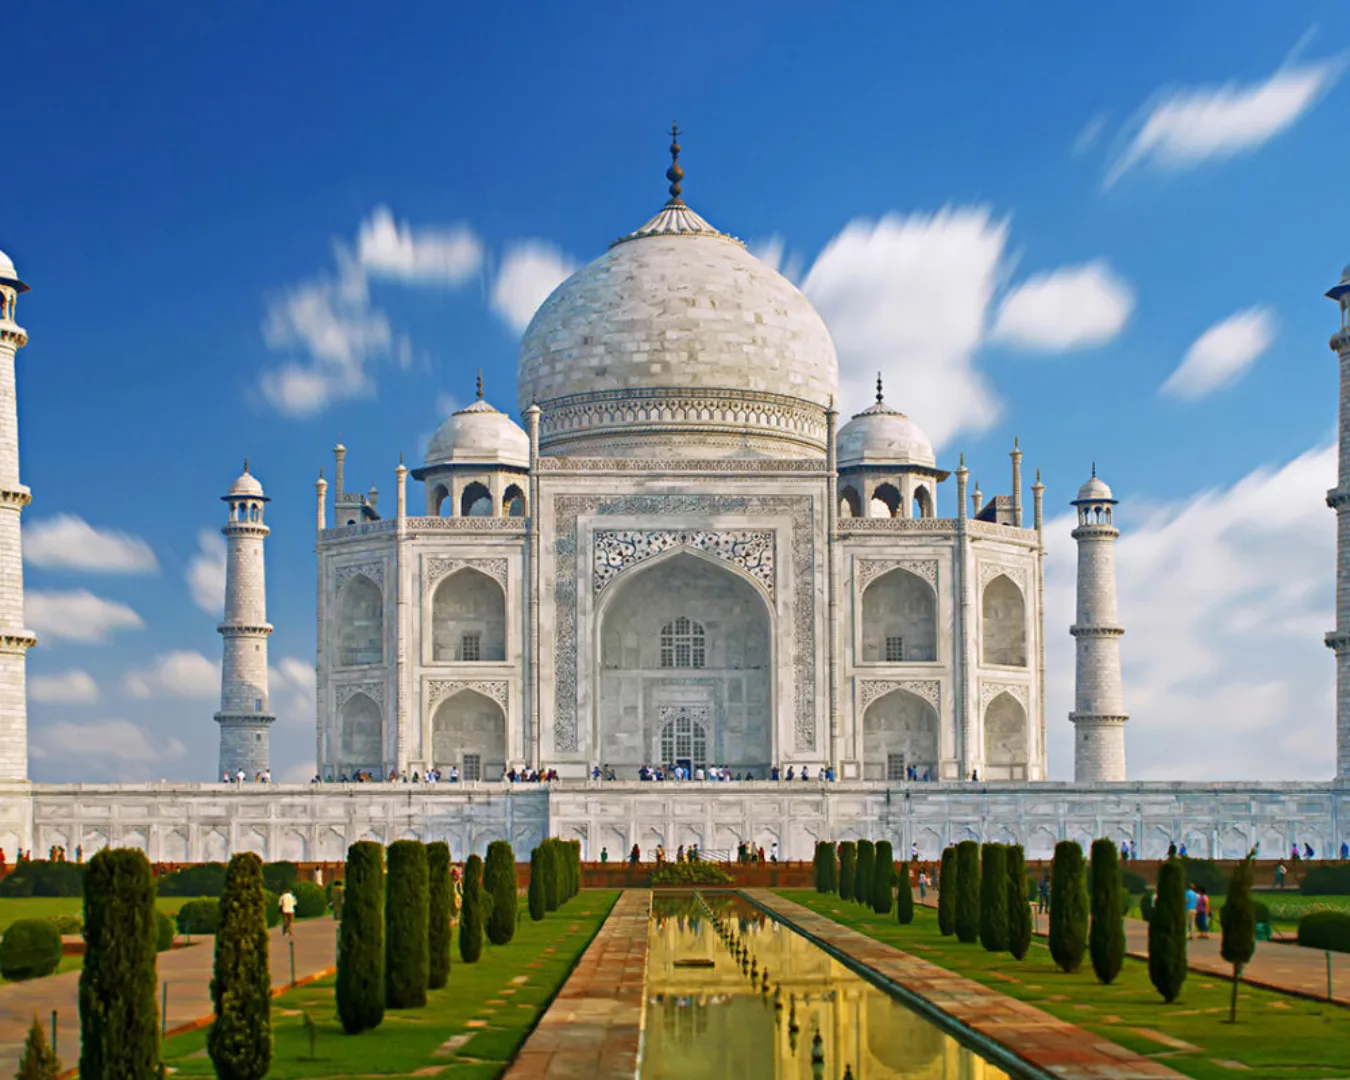 Fototapete "Taj Mahal" 4,00x2,50 m / Strukturvlies Klassik günstig online kaufen